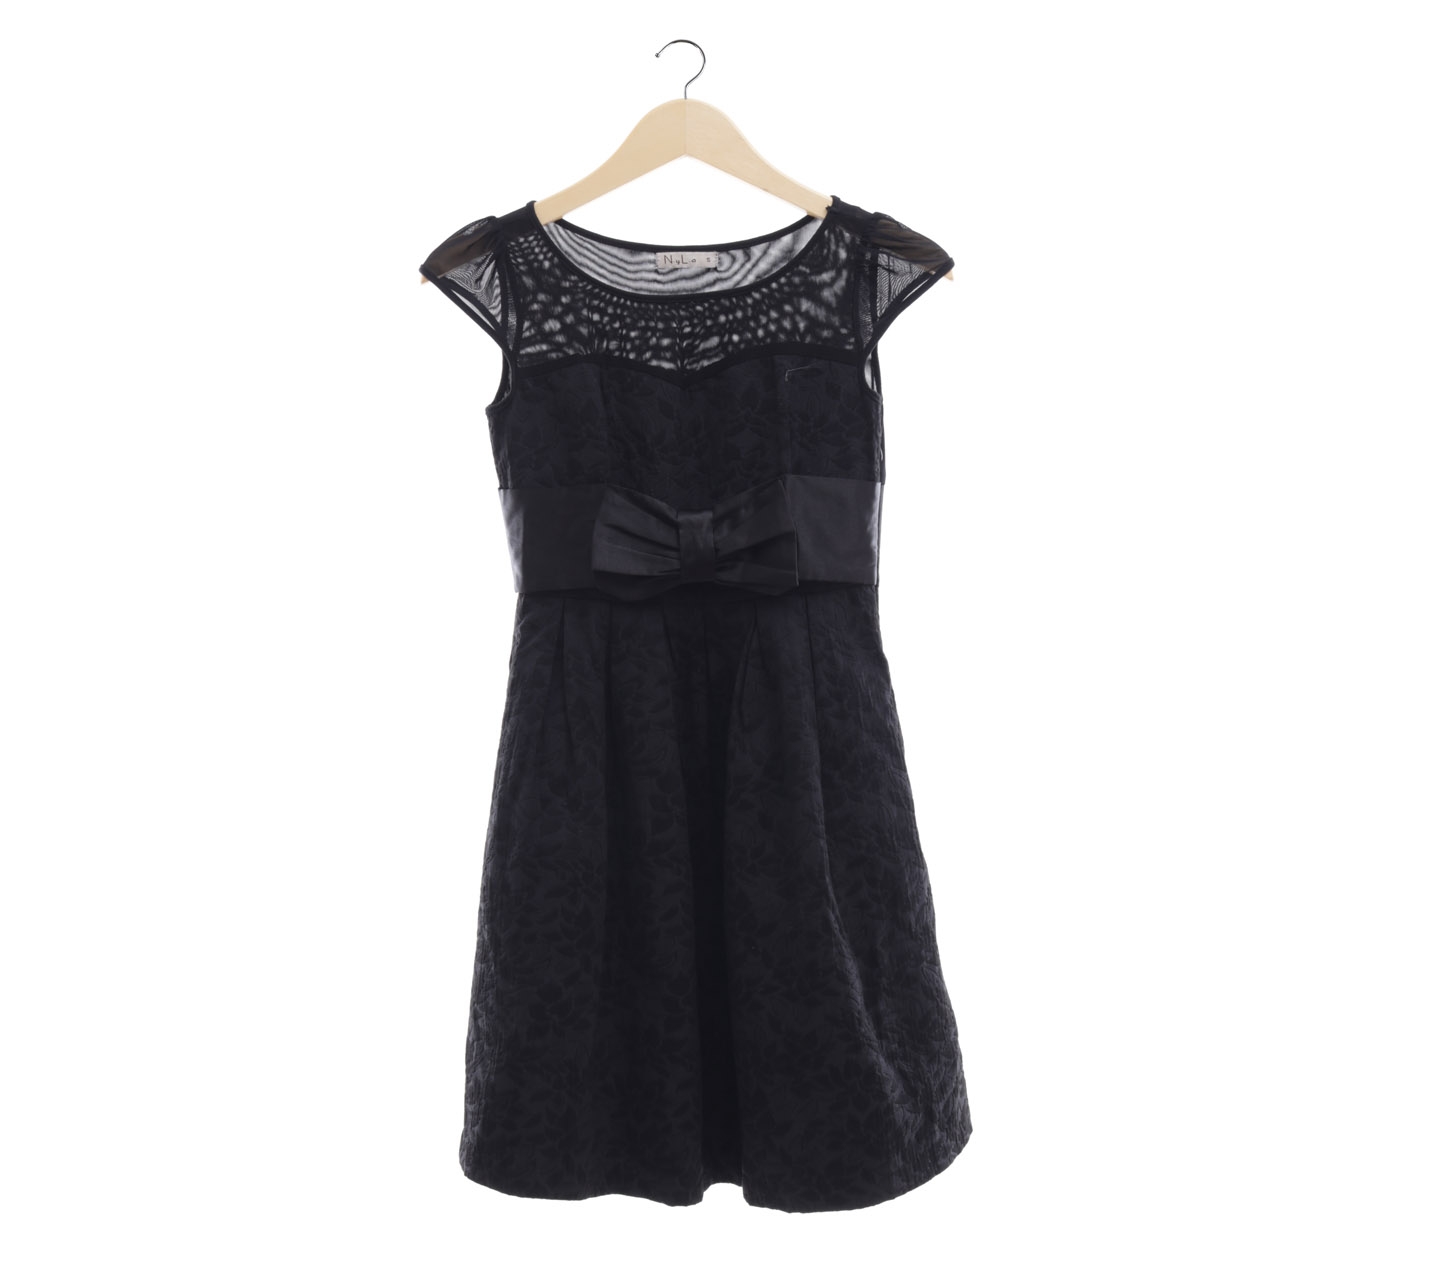 N.y.l.a Black Patterned Floral Mini Dress